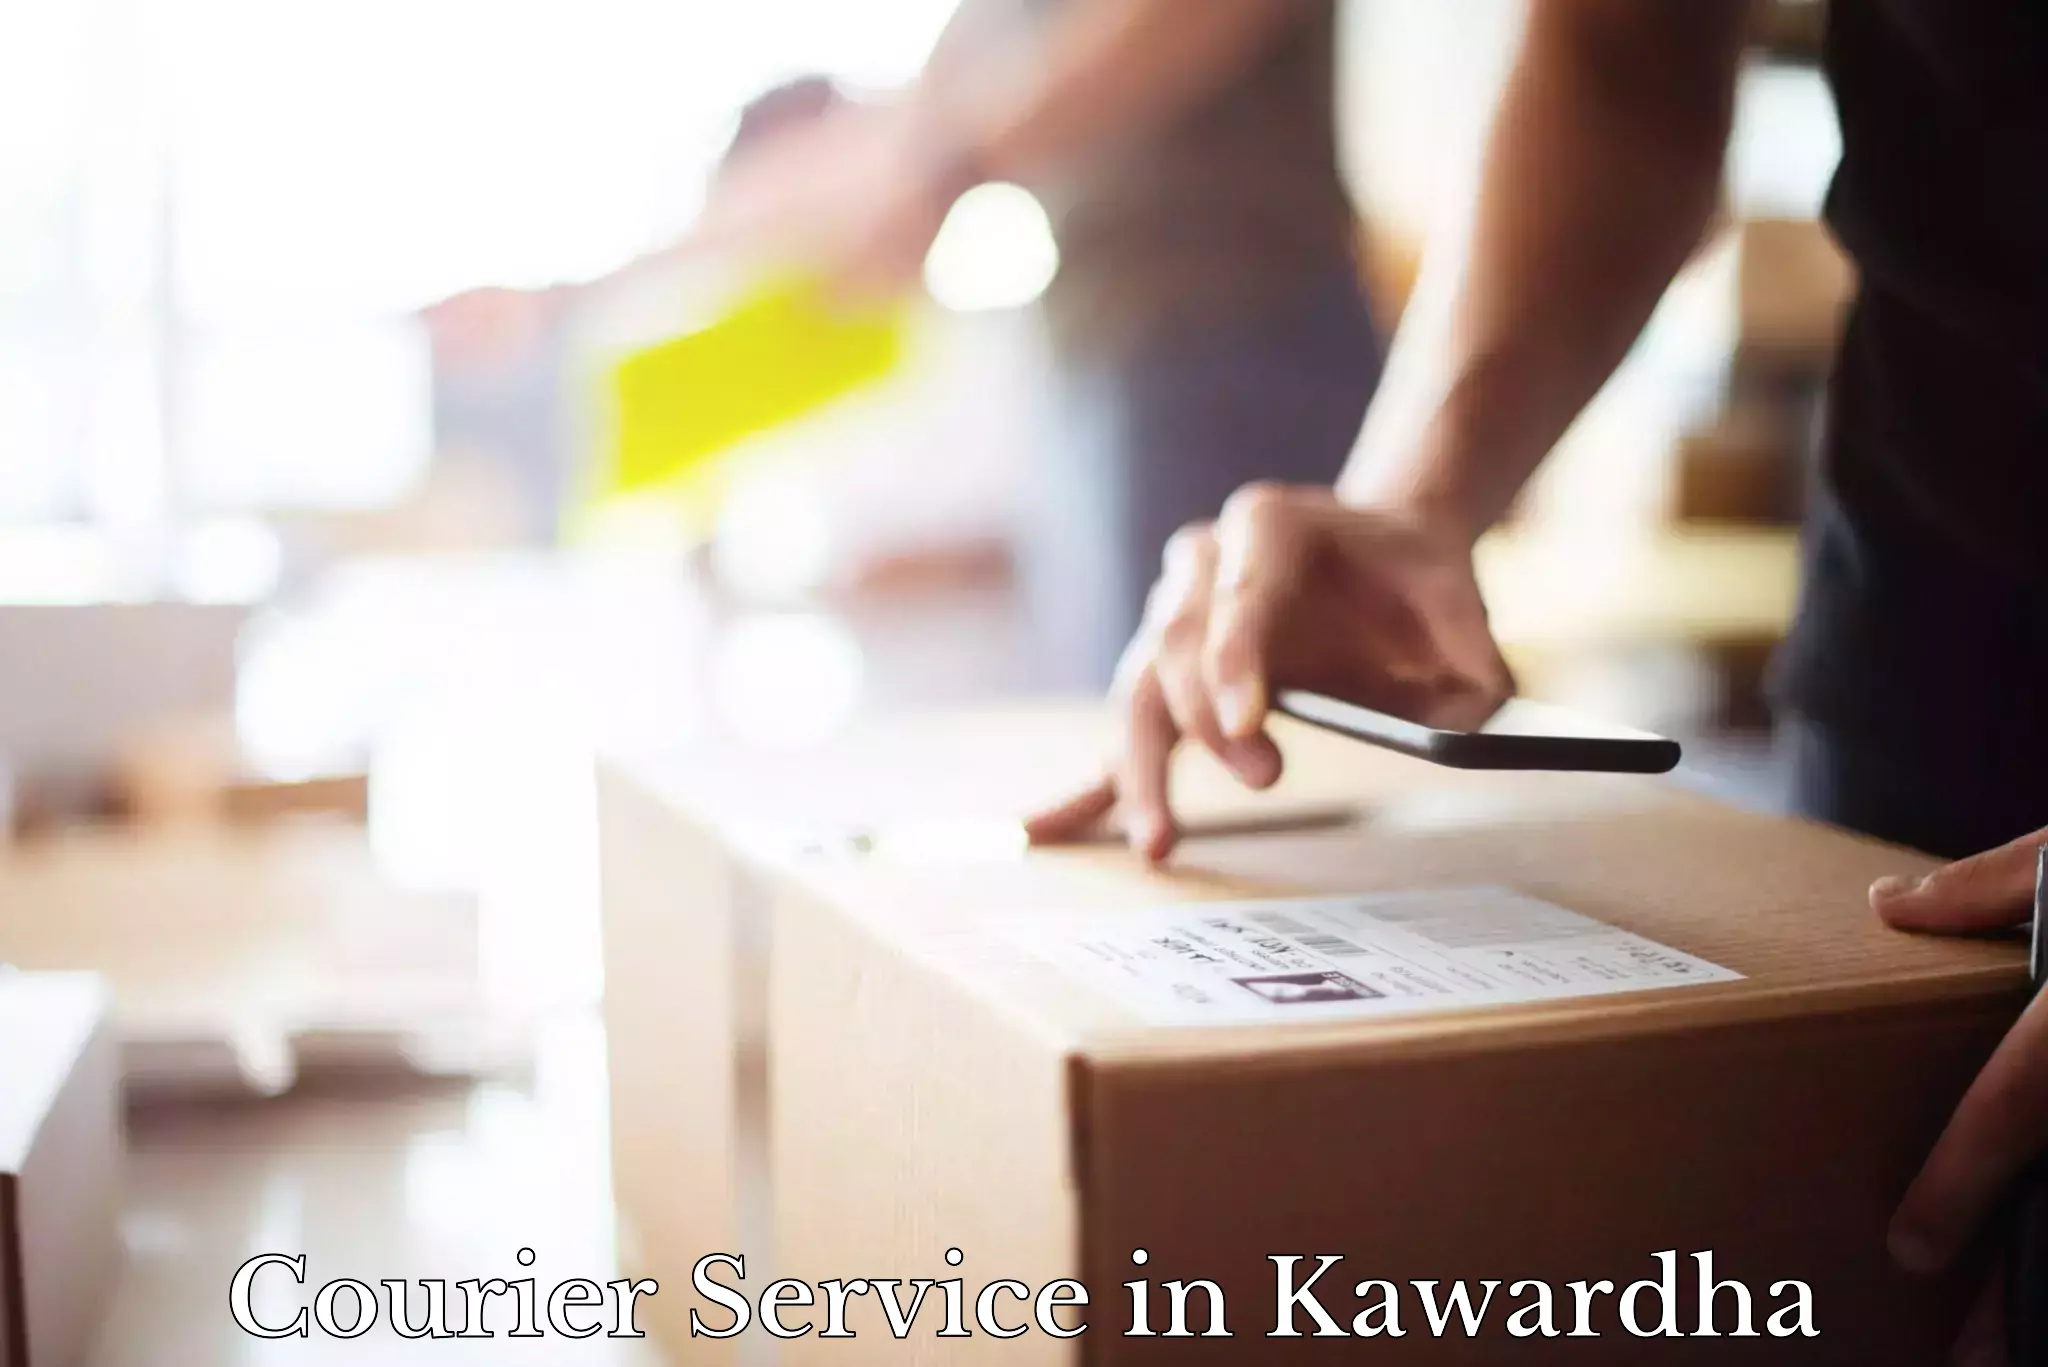 Logistics and distribution in Kawardha